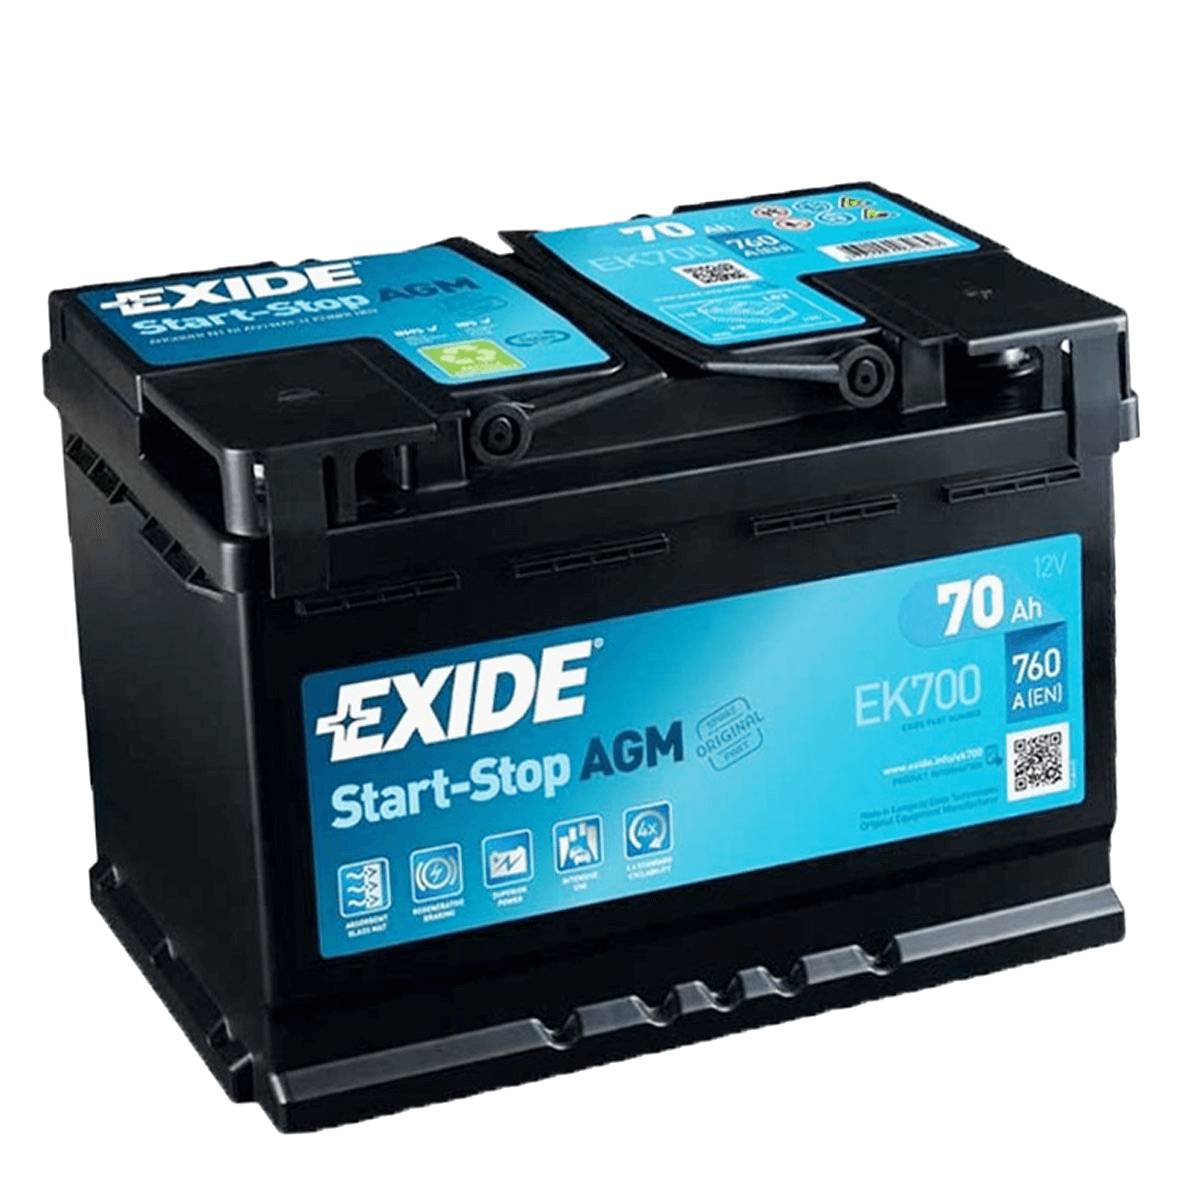 Exide EK700 Start-Stop AGM 12V 70Ah 760A batteria auto